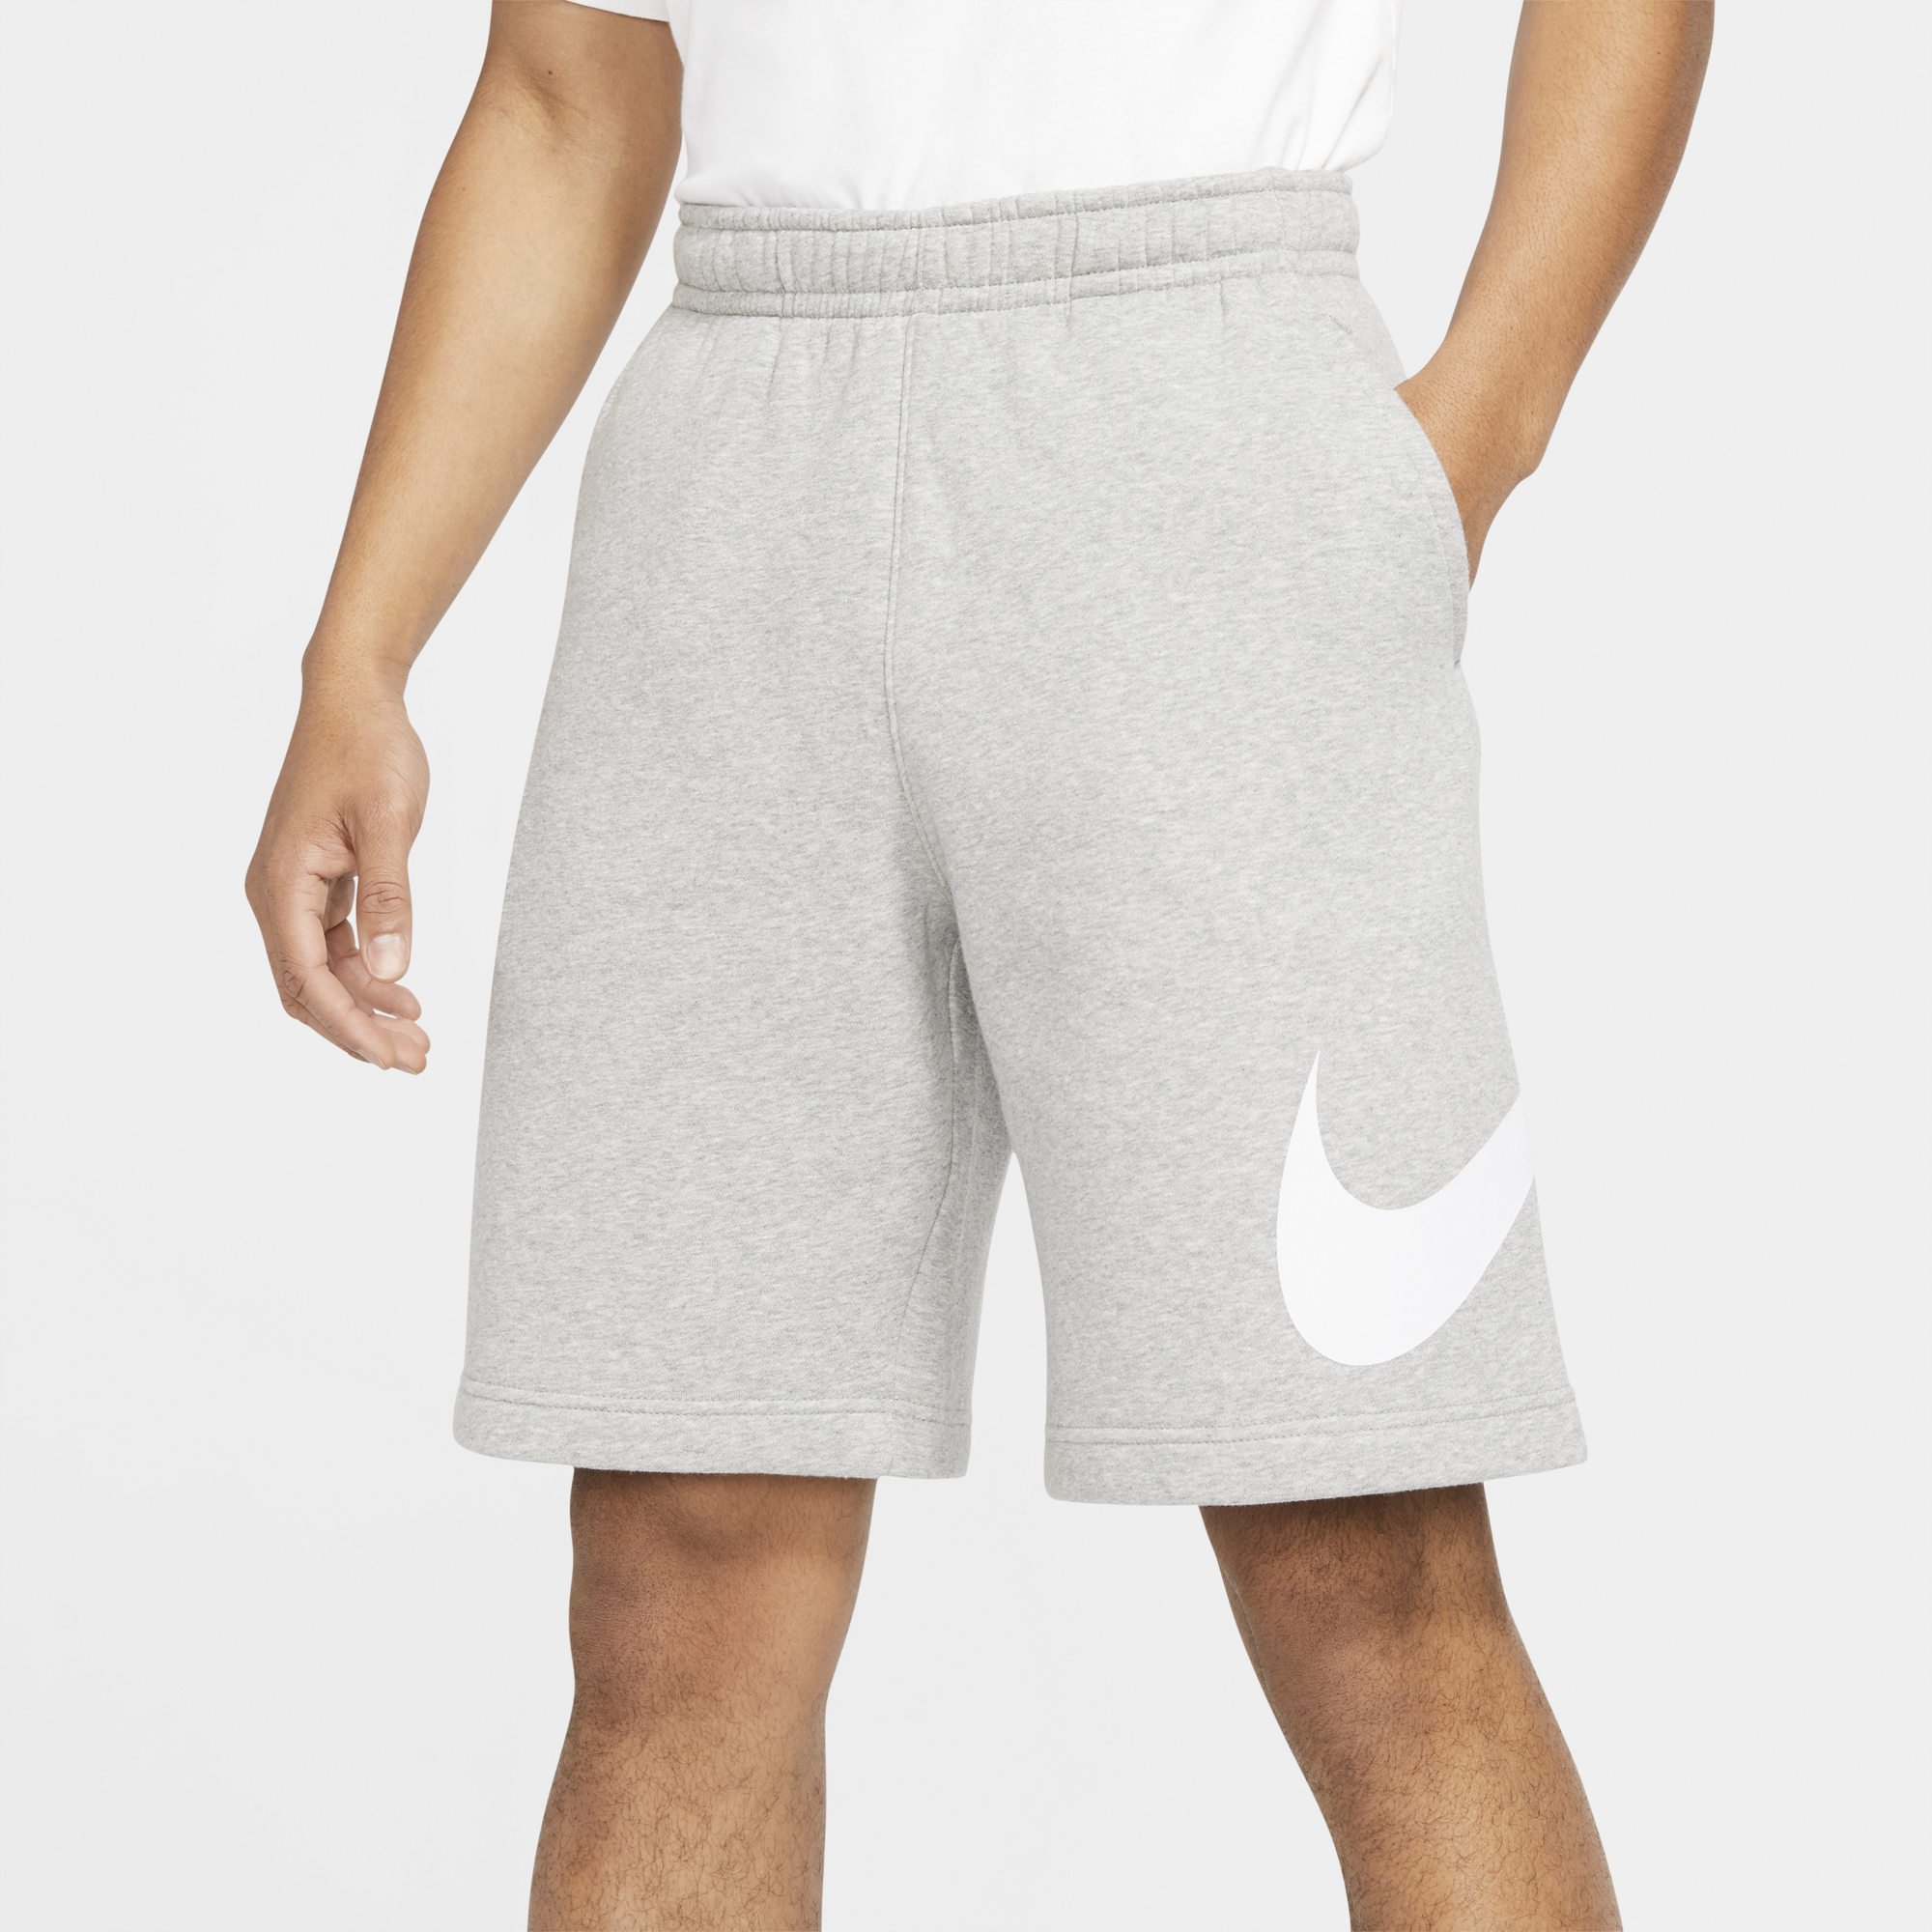 grey nike sportswear shorts